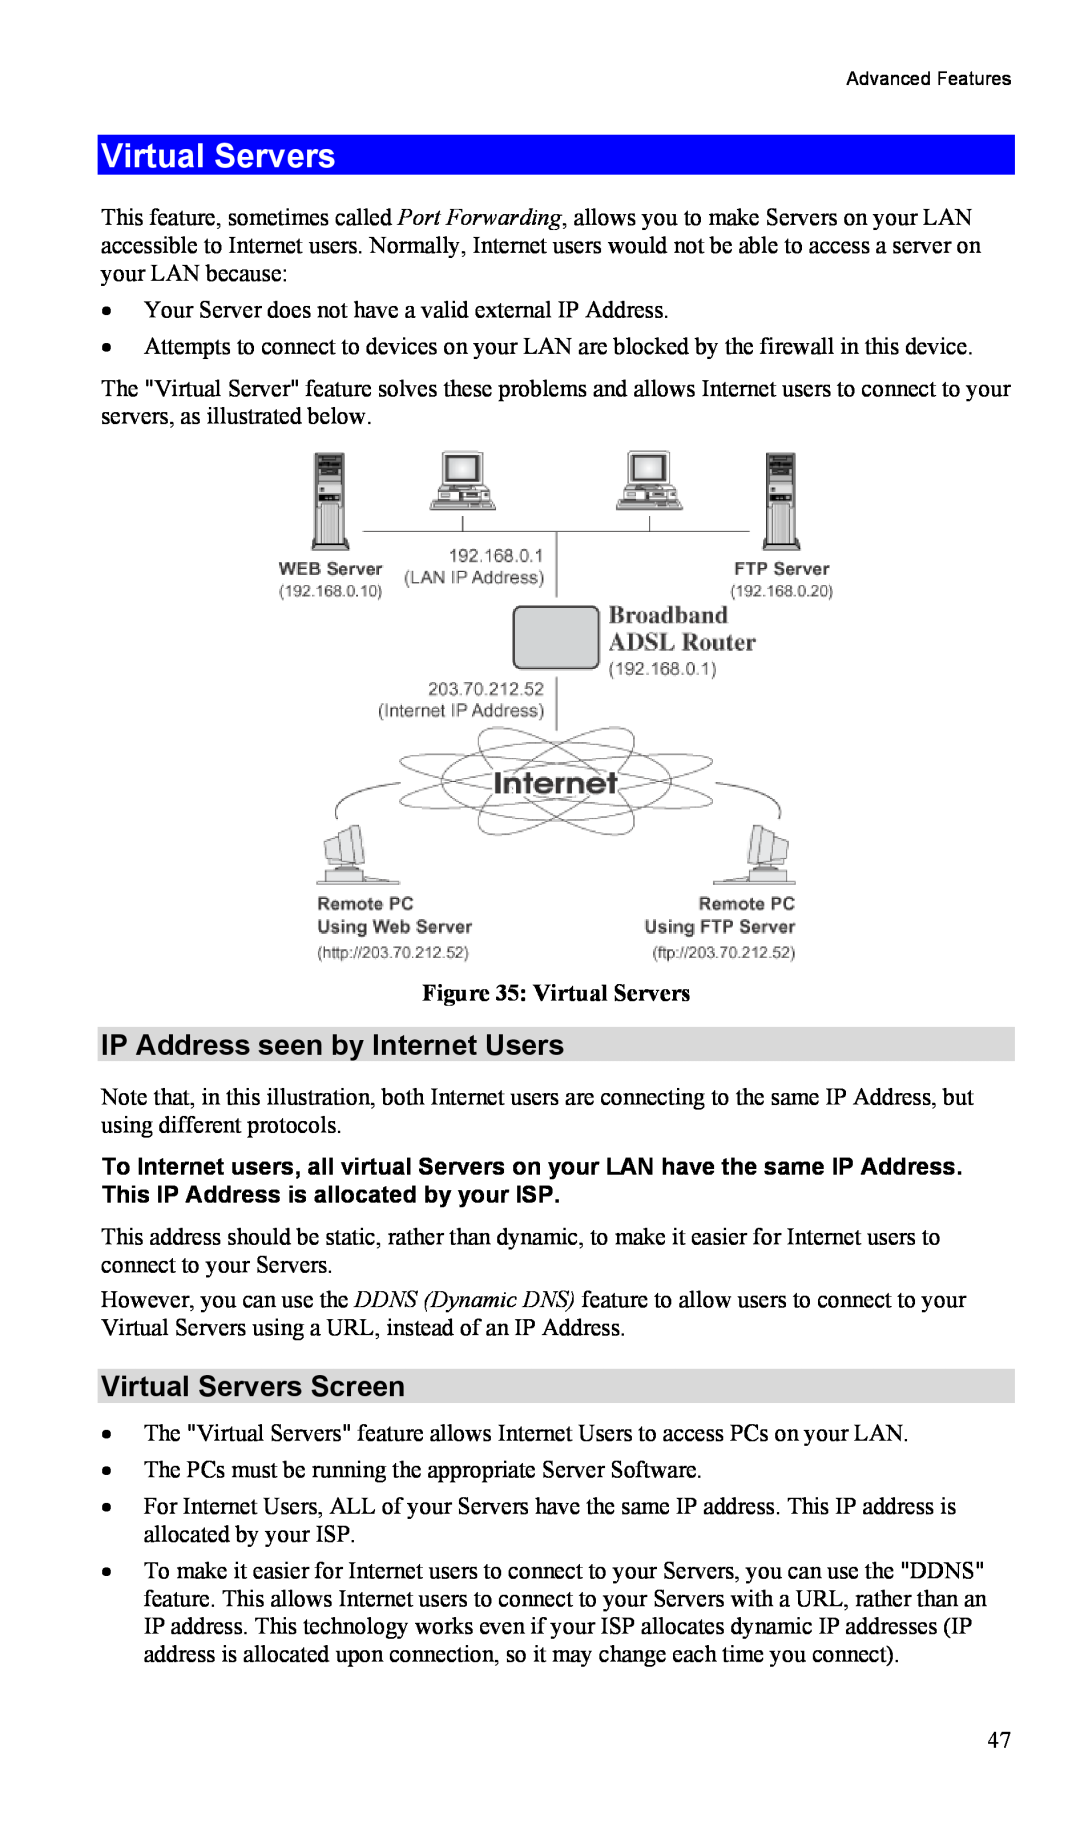 TRENDnet TW100-BRM504 manual IP Address seen by Internet Users, Virtual Servers Screen 